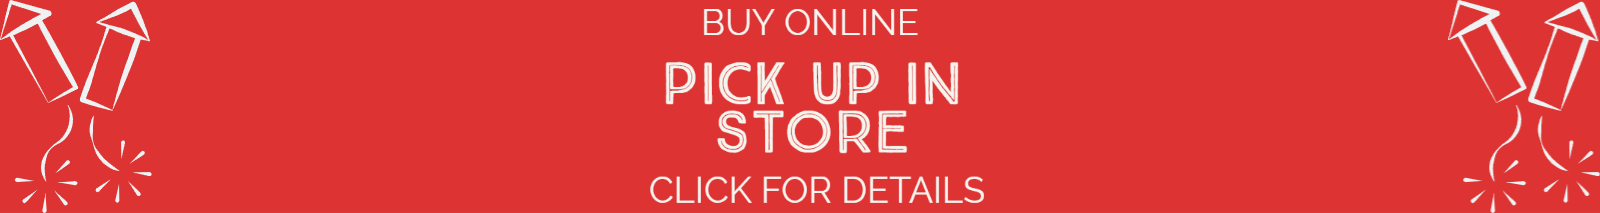 Buy Online Pick Up In Store